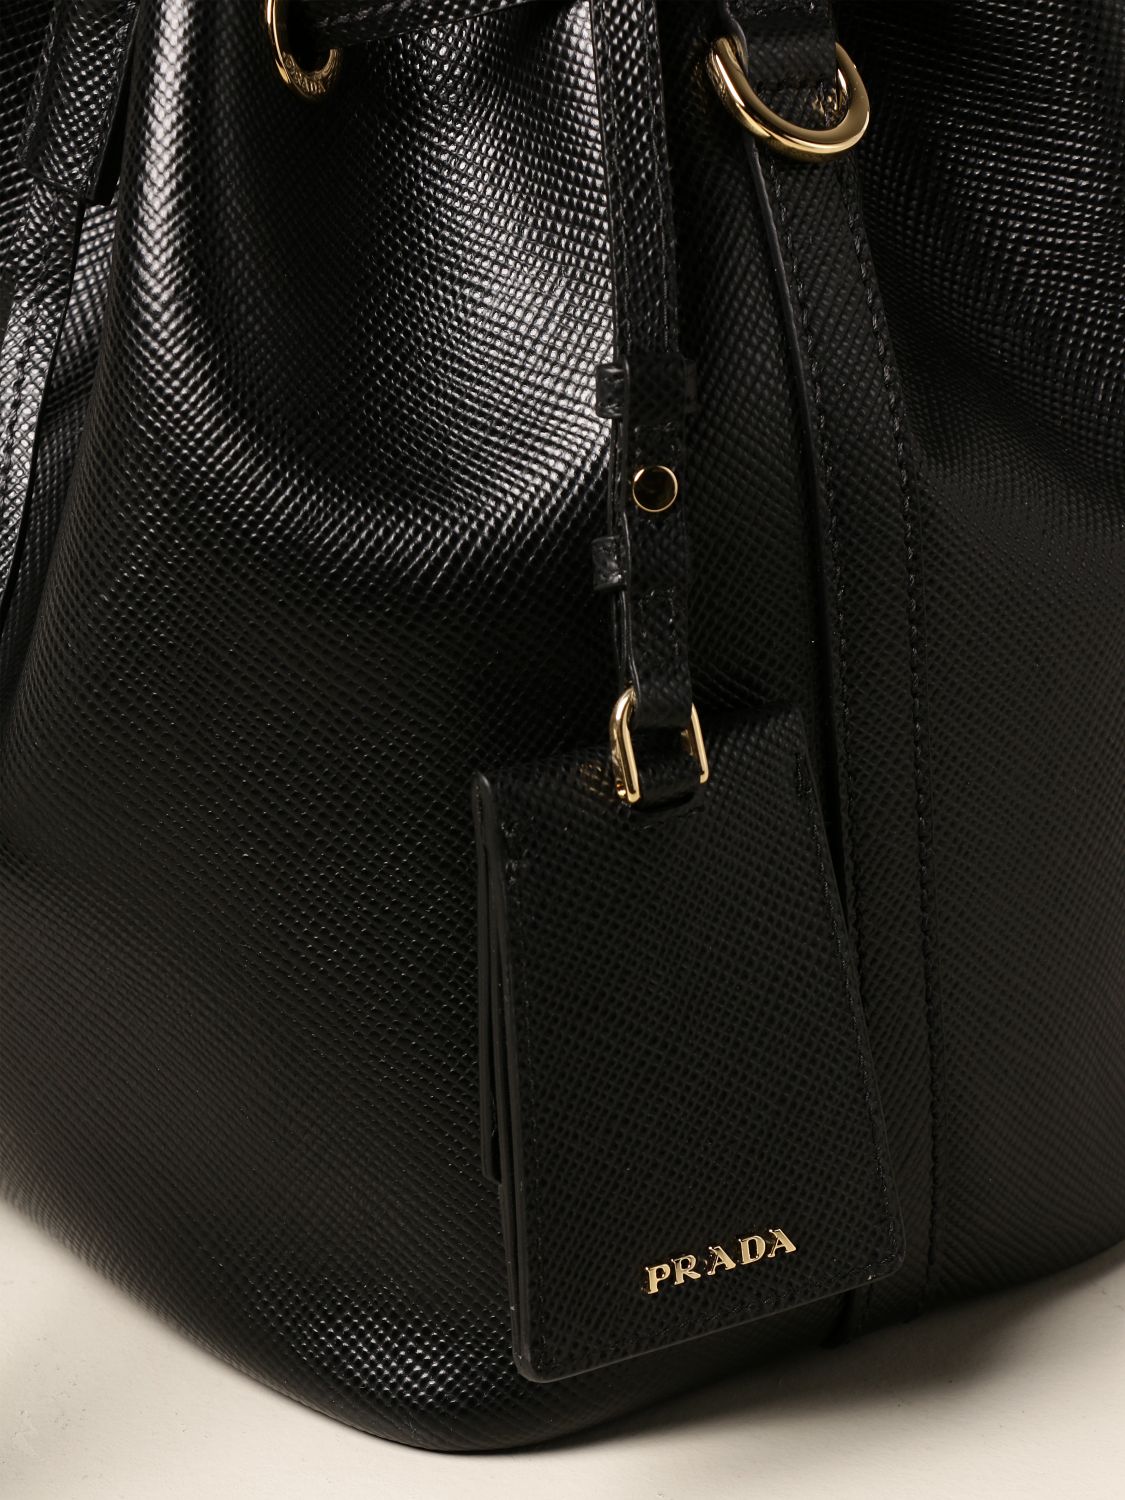 PRADA: bucket bag in saffiano leather - Black | Prada handbag 1BE032